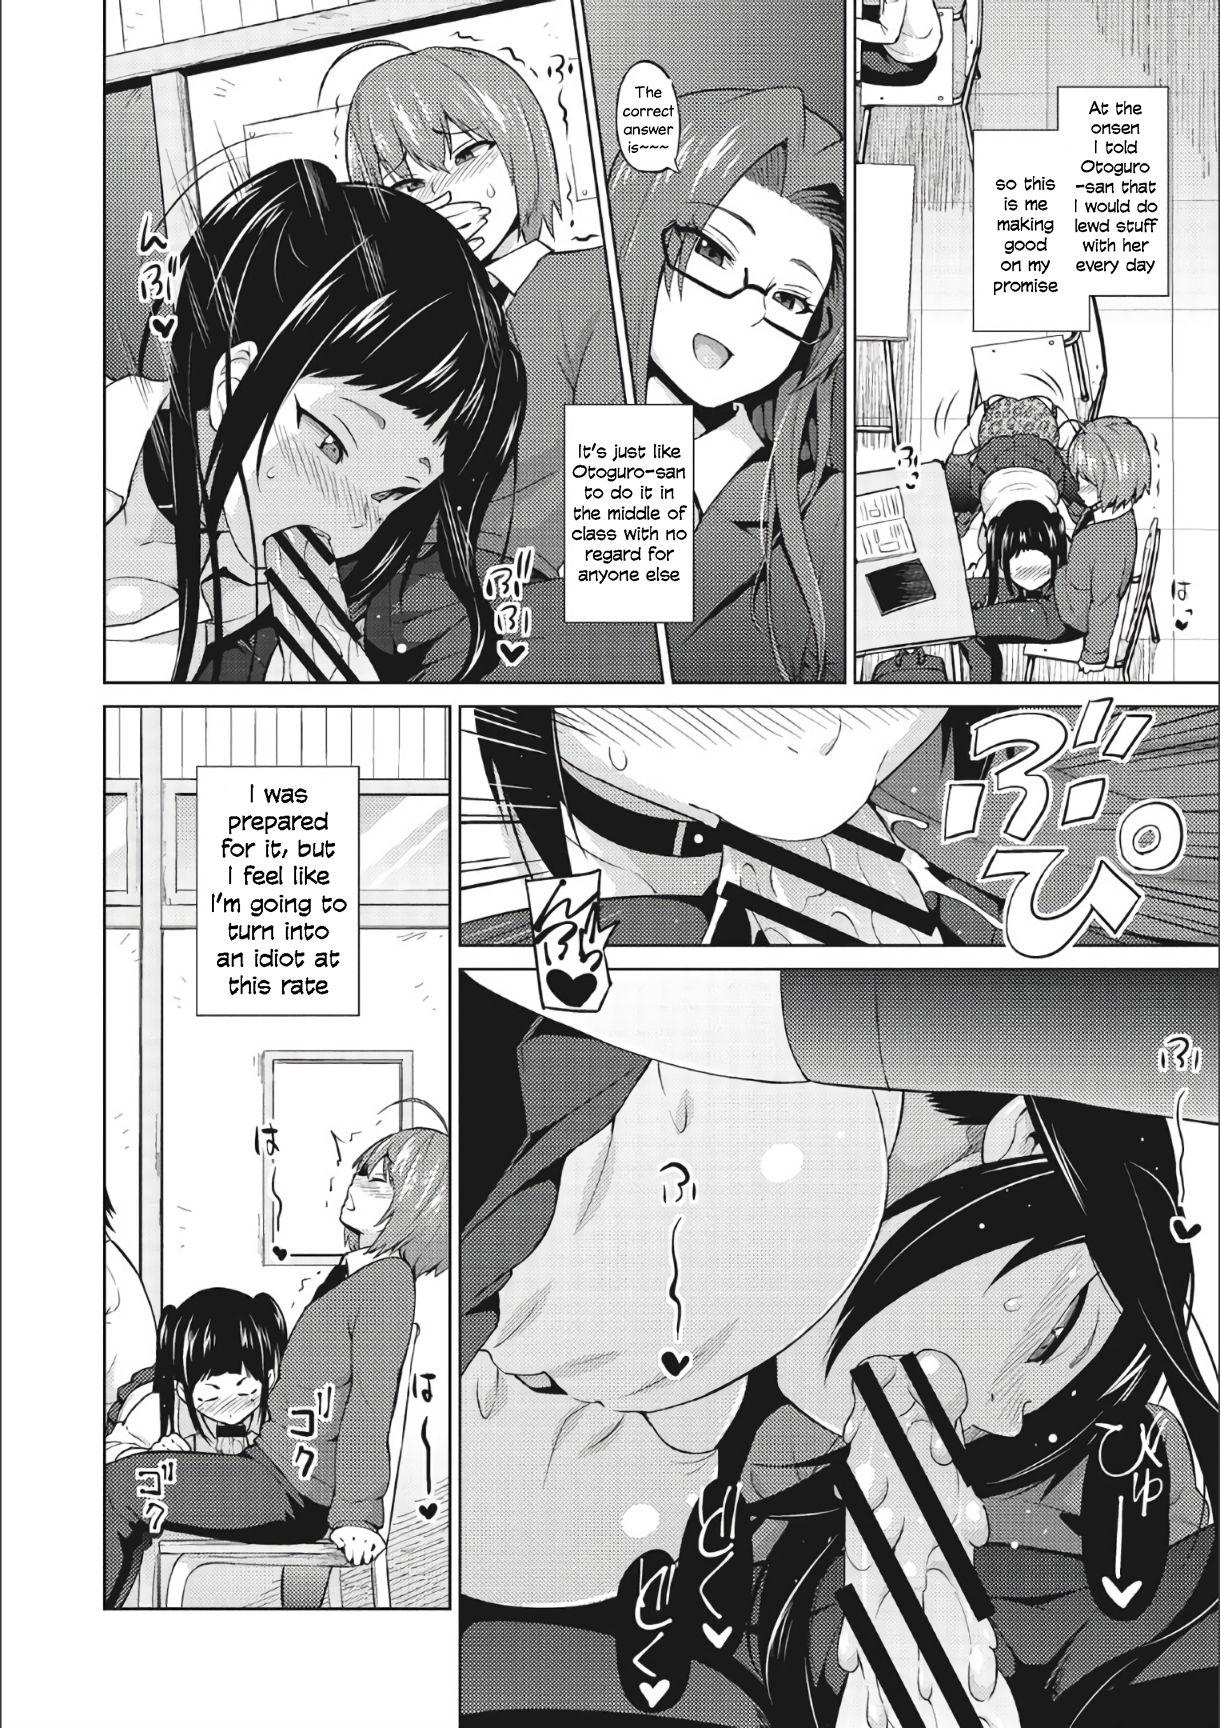 Trans Otoguro Miya no Oasobi #3 Blow Jobs - Page 2